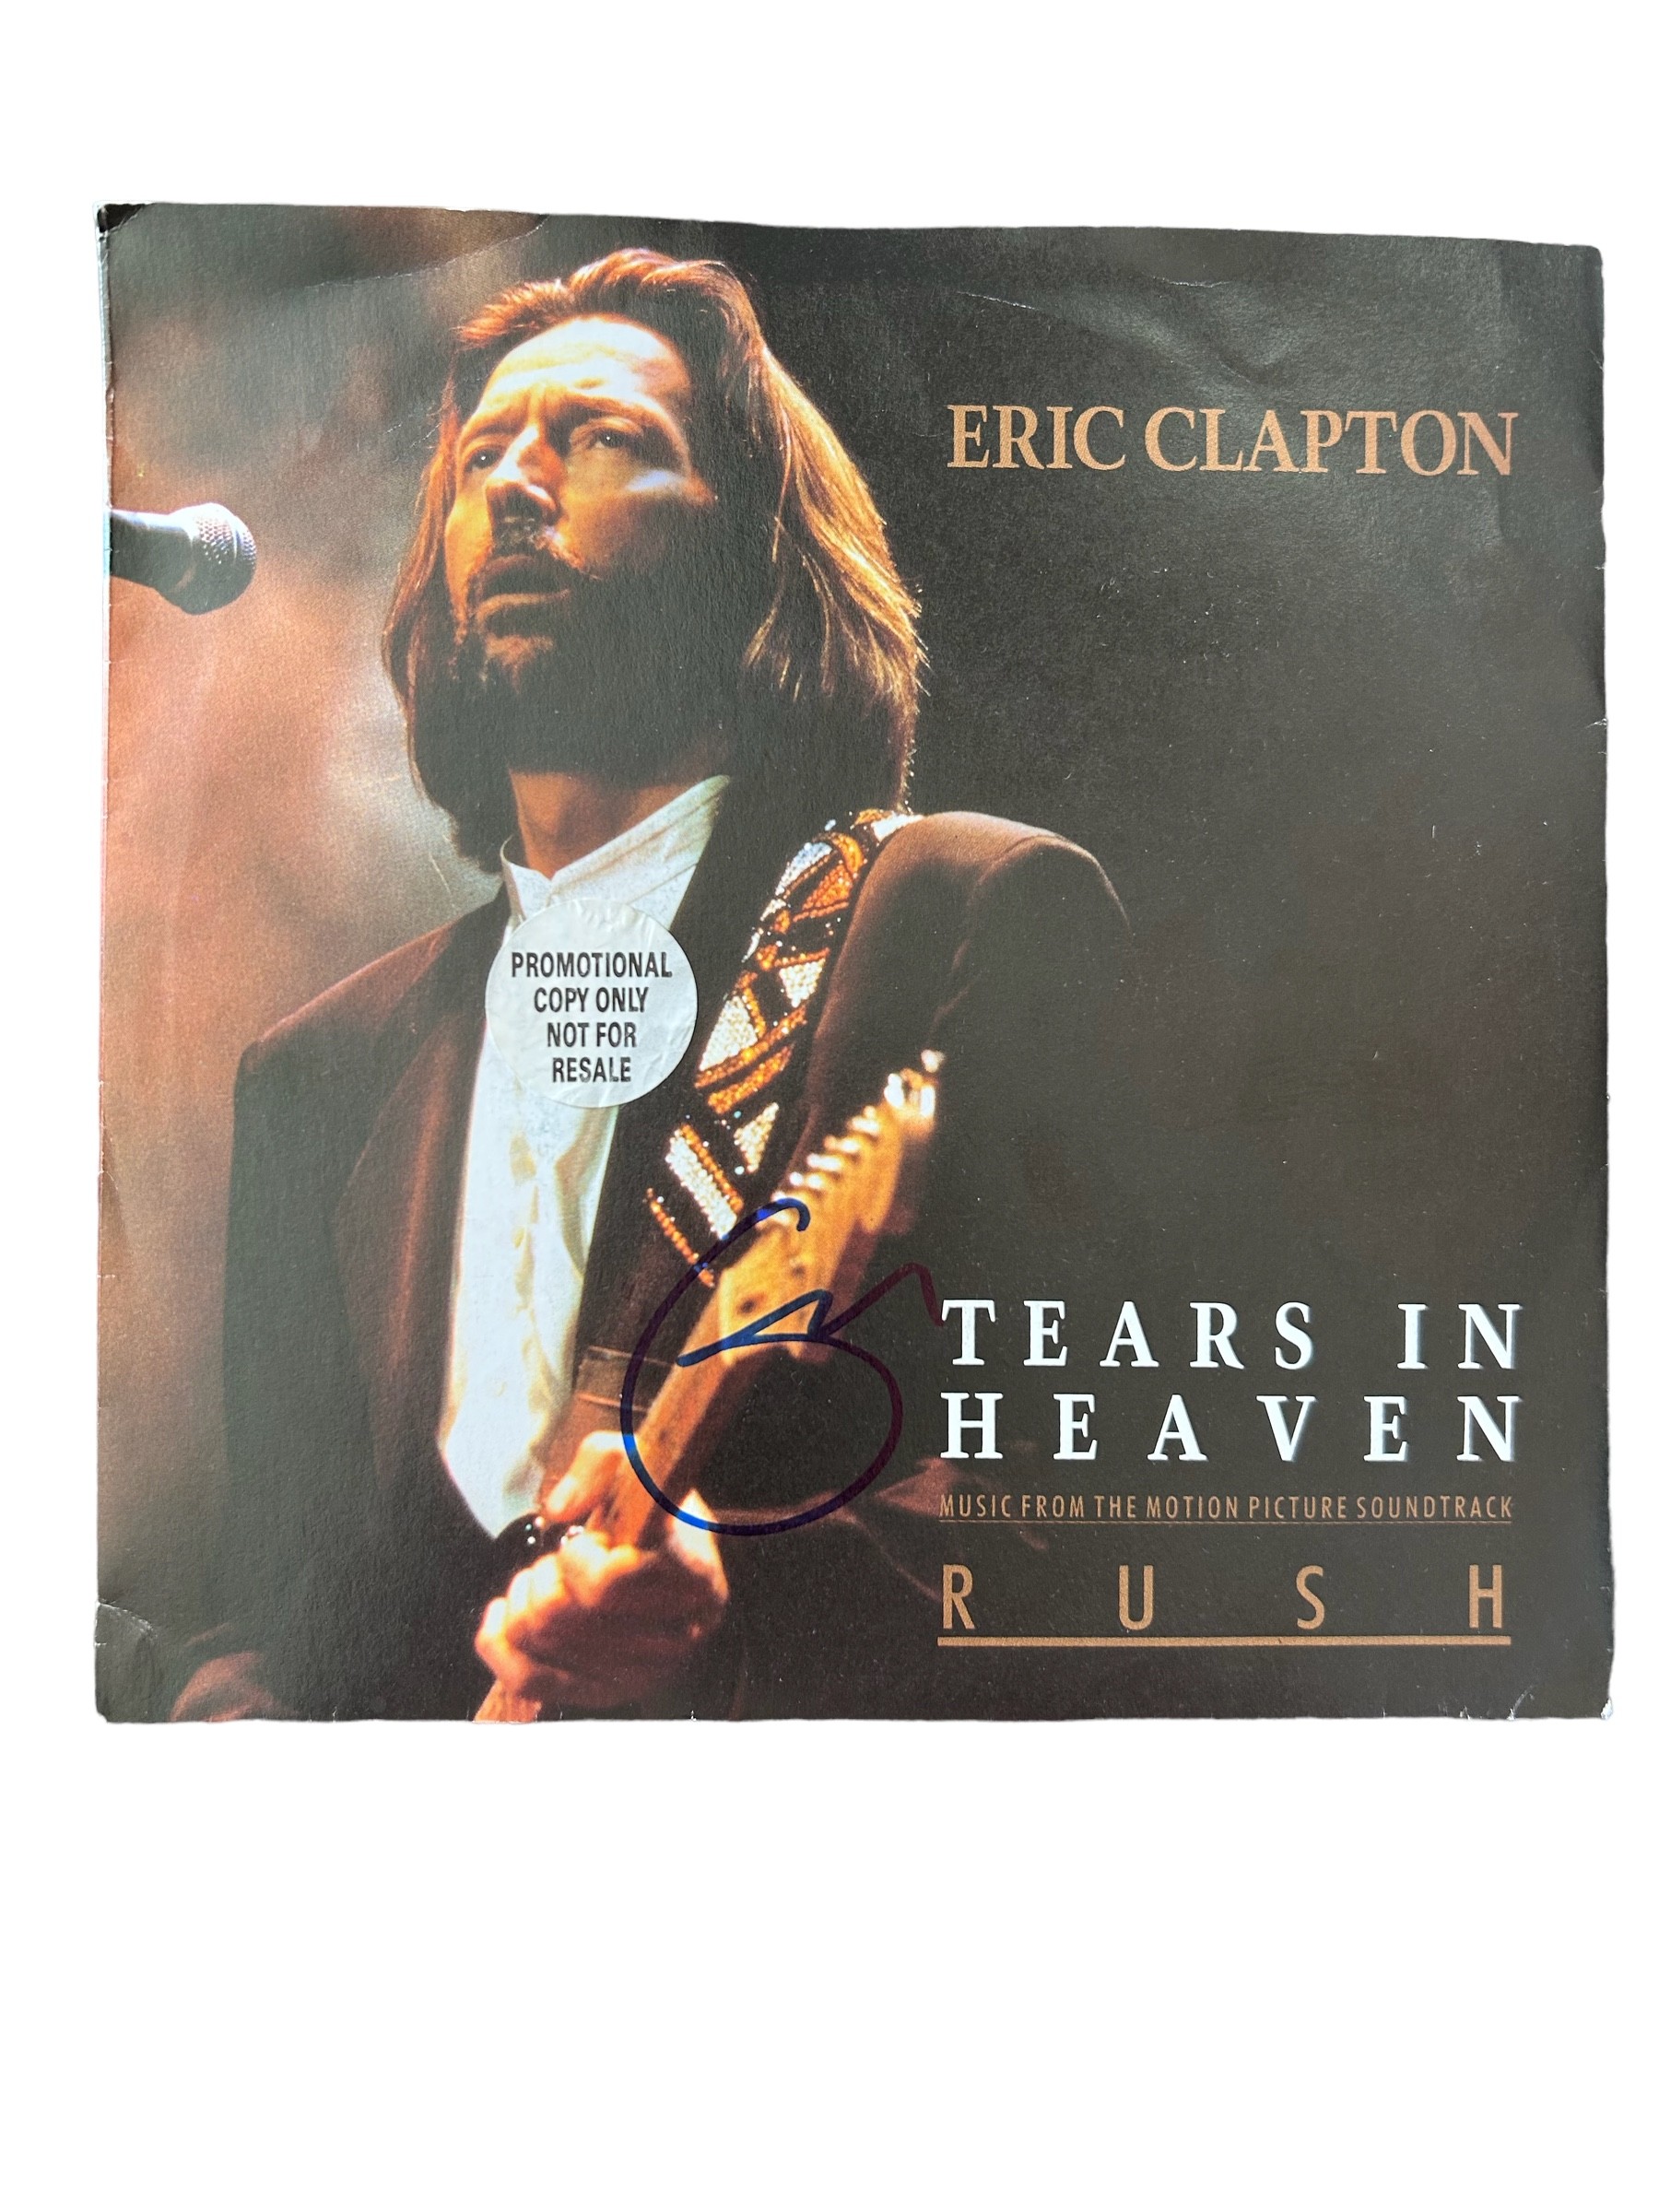 favorite little lyrics — Eric Clapton, “Tears in Heaven”